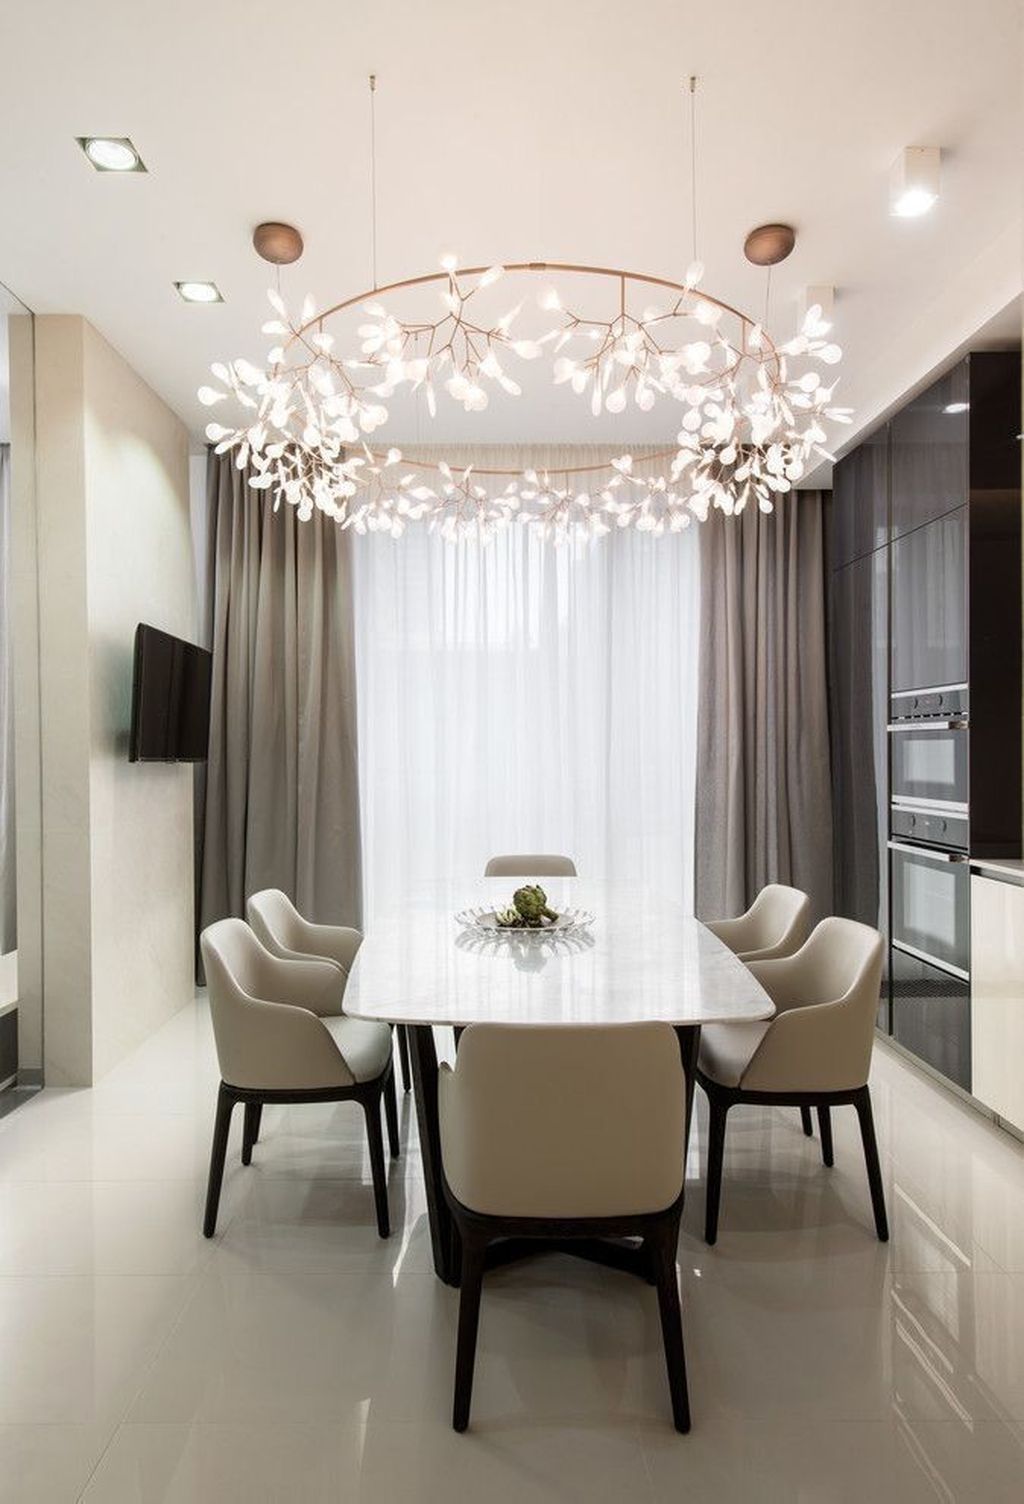 Popular Contemporary Dining Room Design Ideas 25 Homyhomee